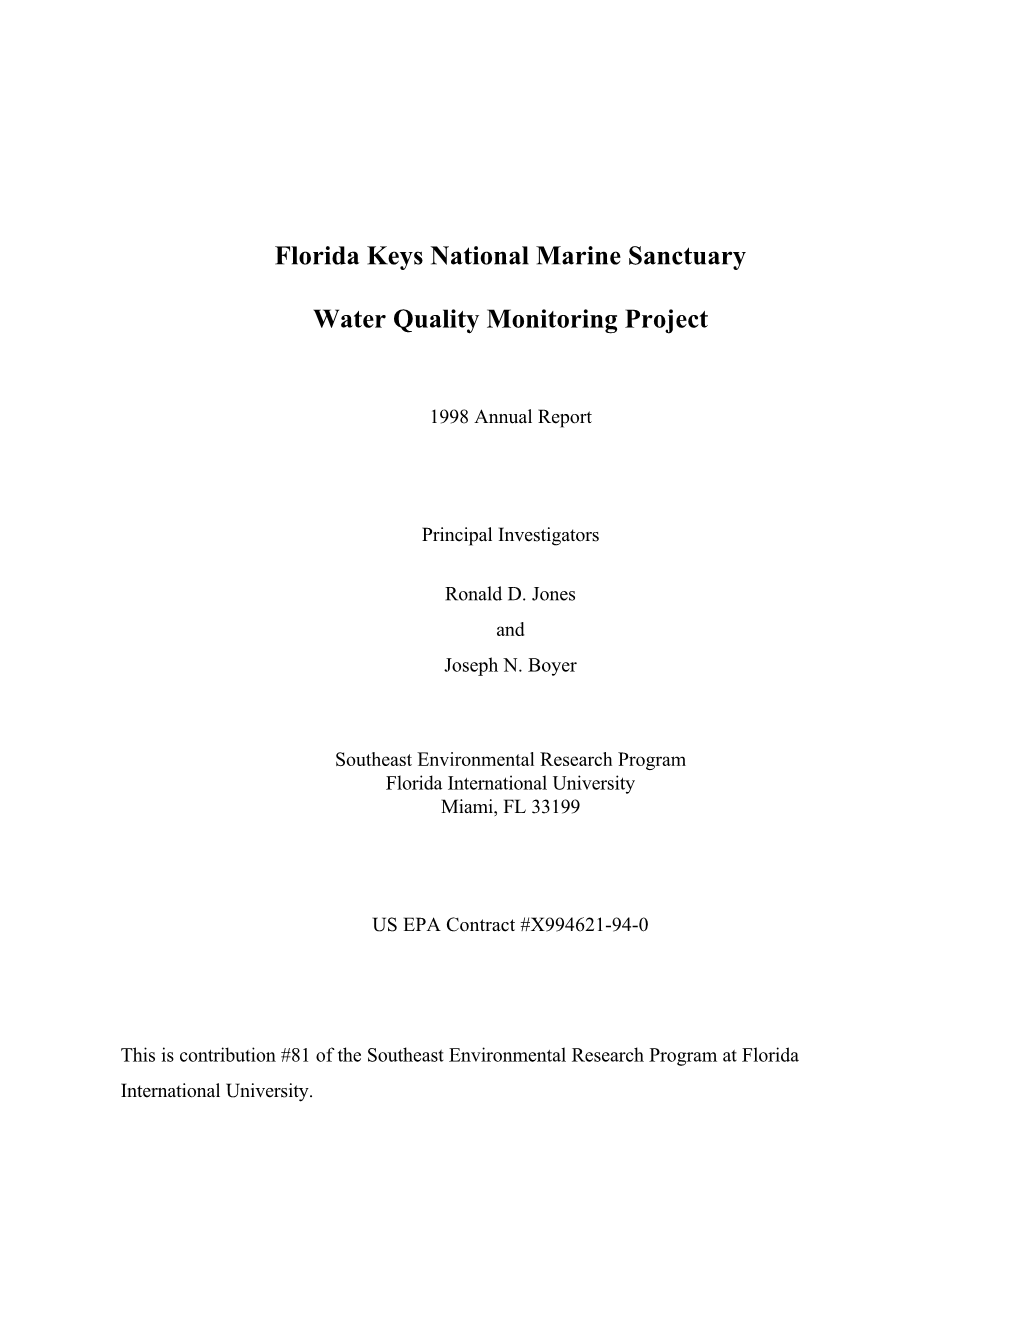 Florida Keys National Marine Sanctuary Water Quality Monitoring